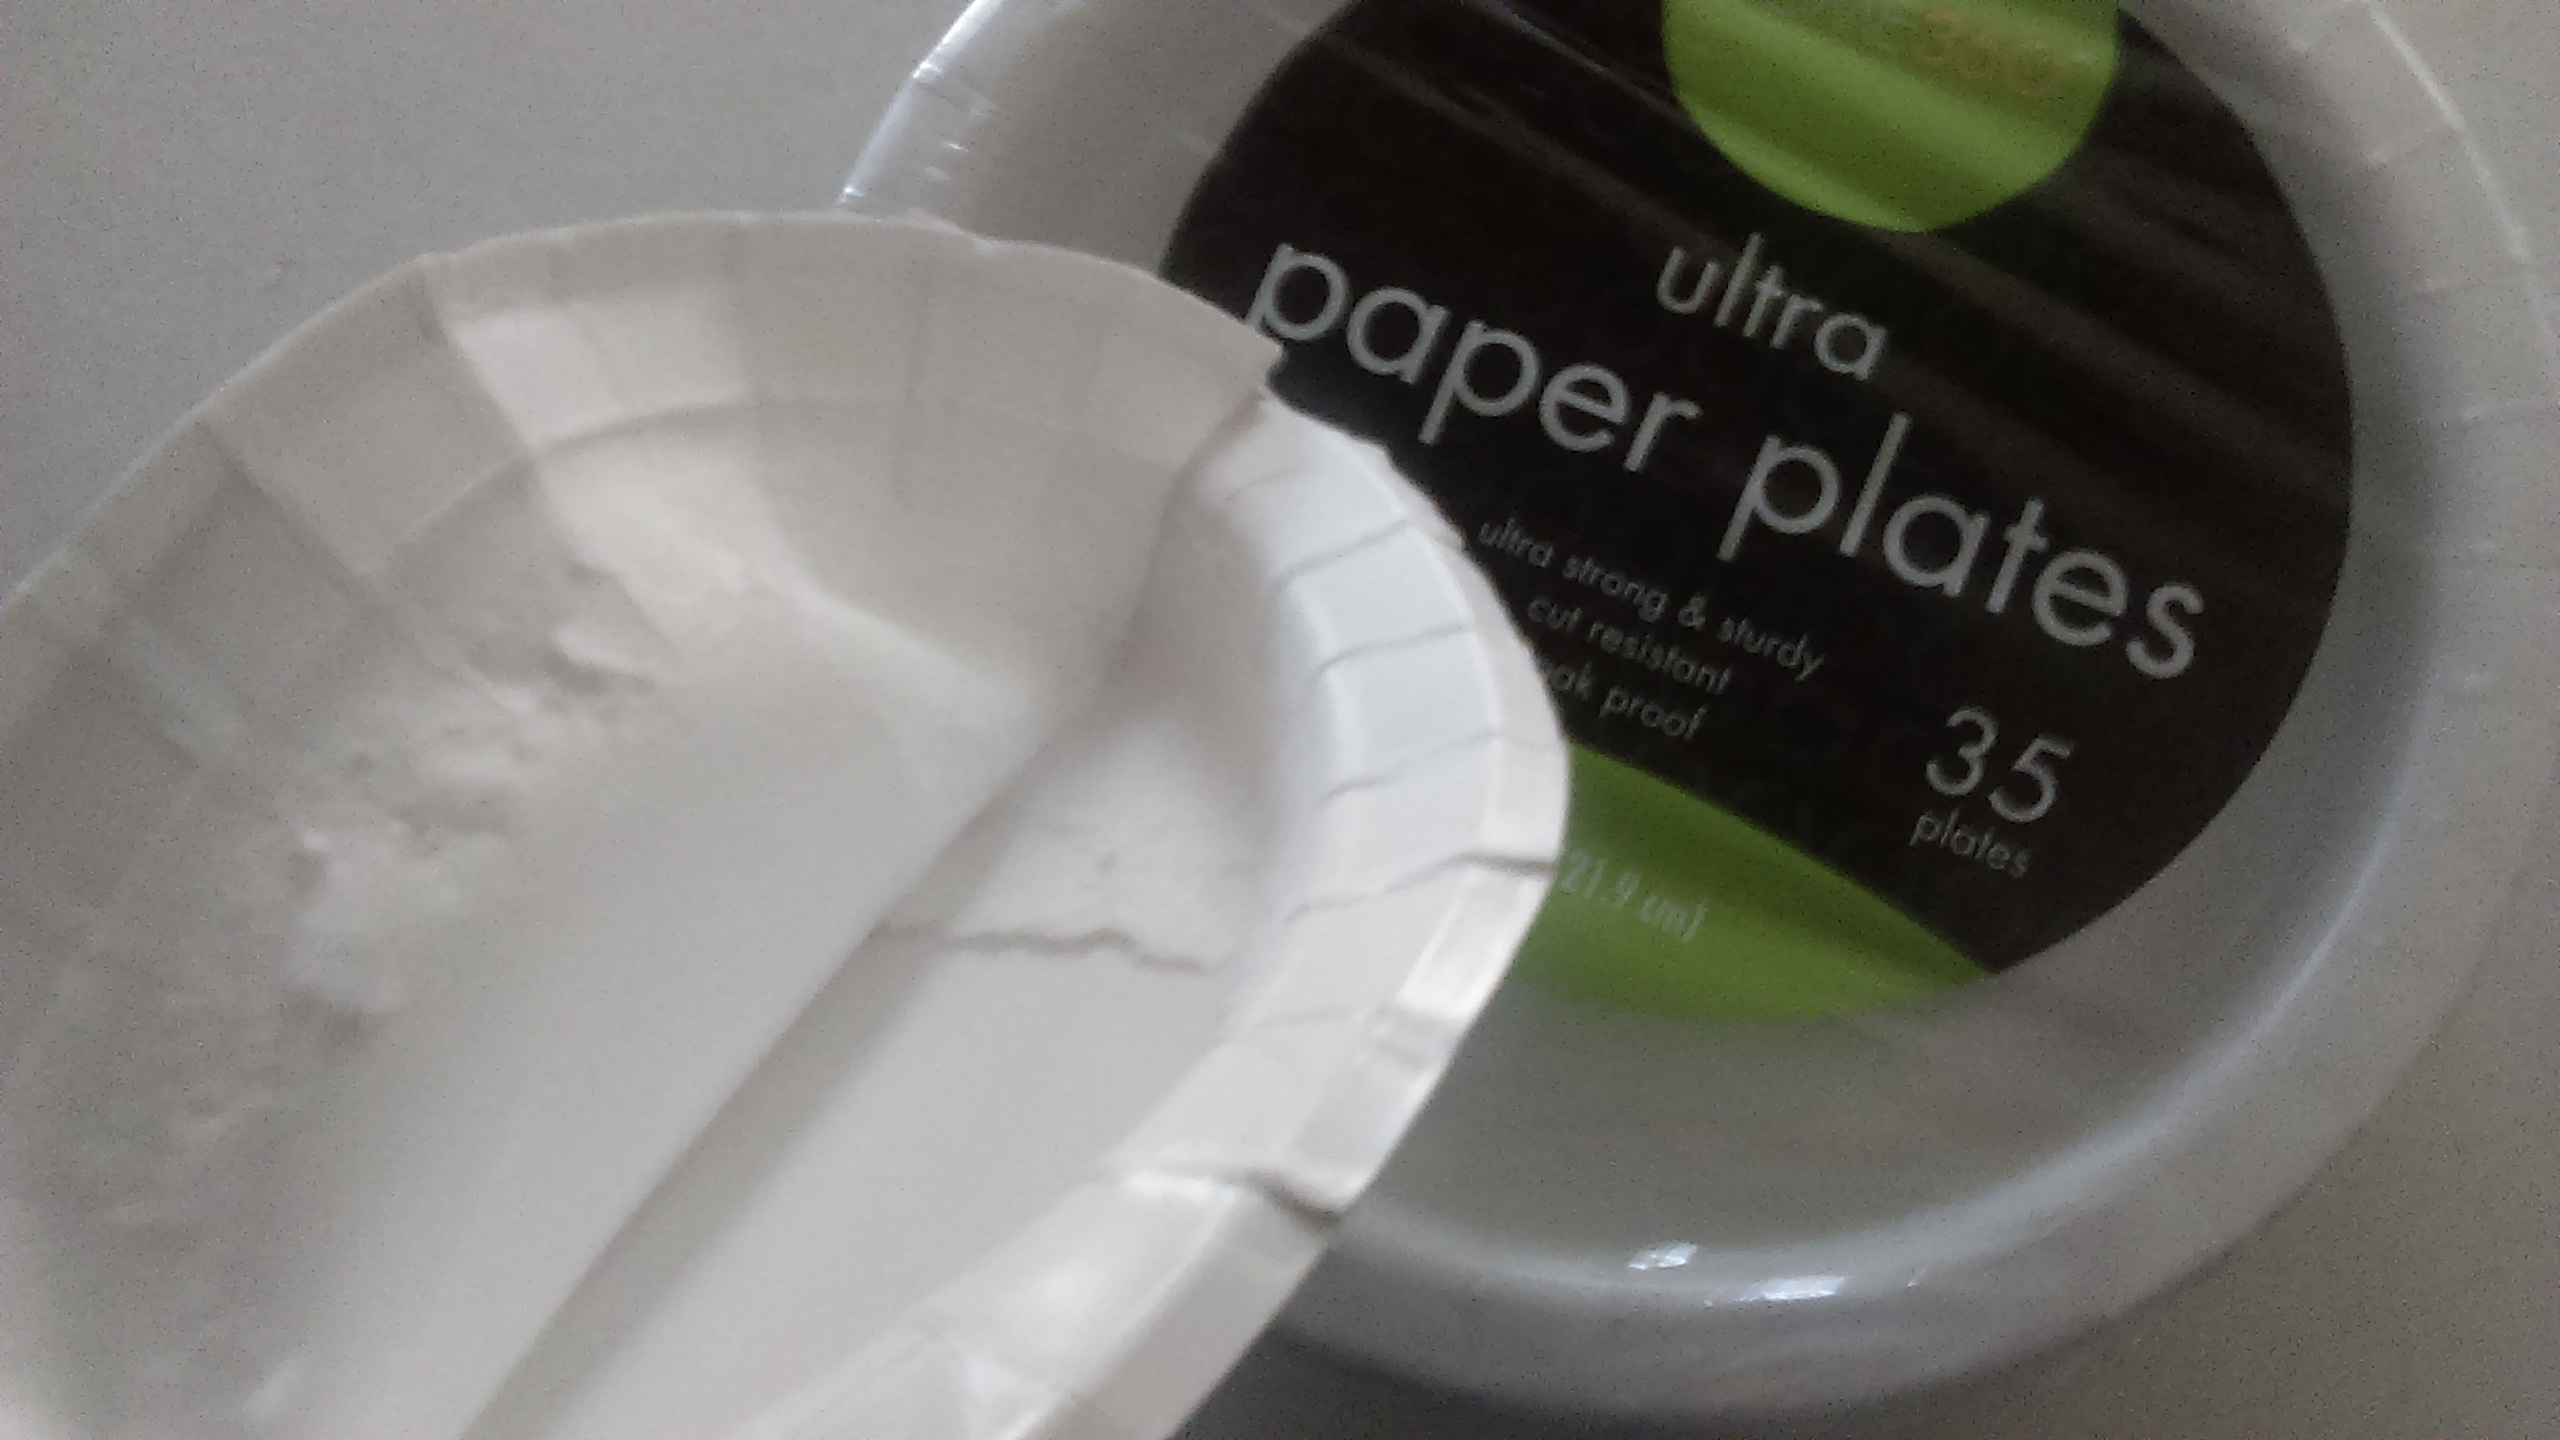 ultra paper plates raong sudy rok prool